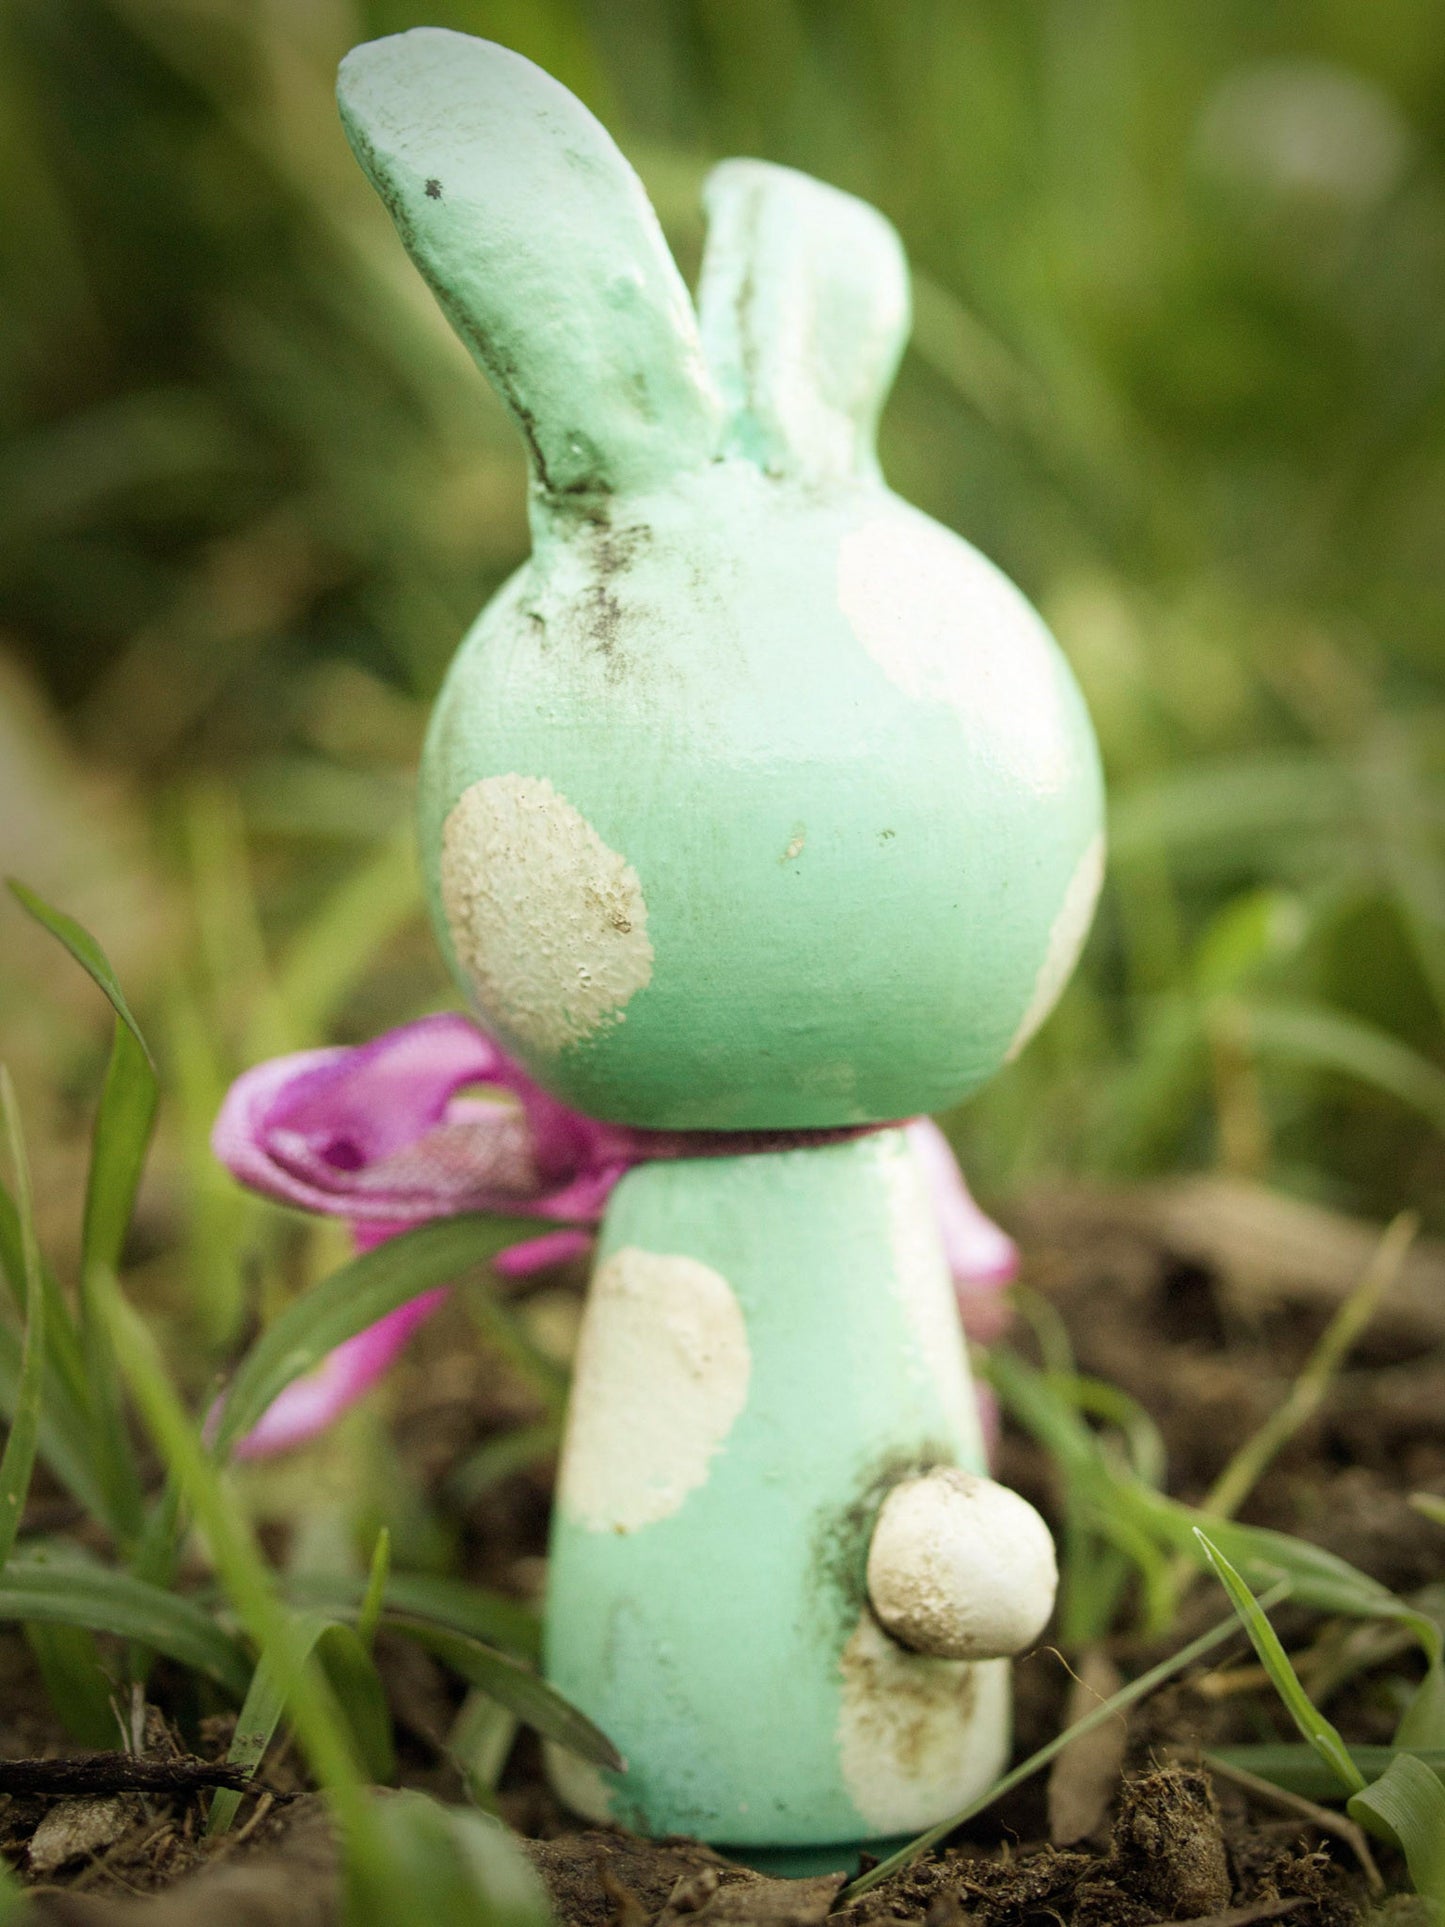 Friday, the green kokeshi Easter bunny, Miniature Dolls by Danita Art